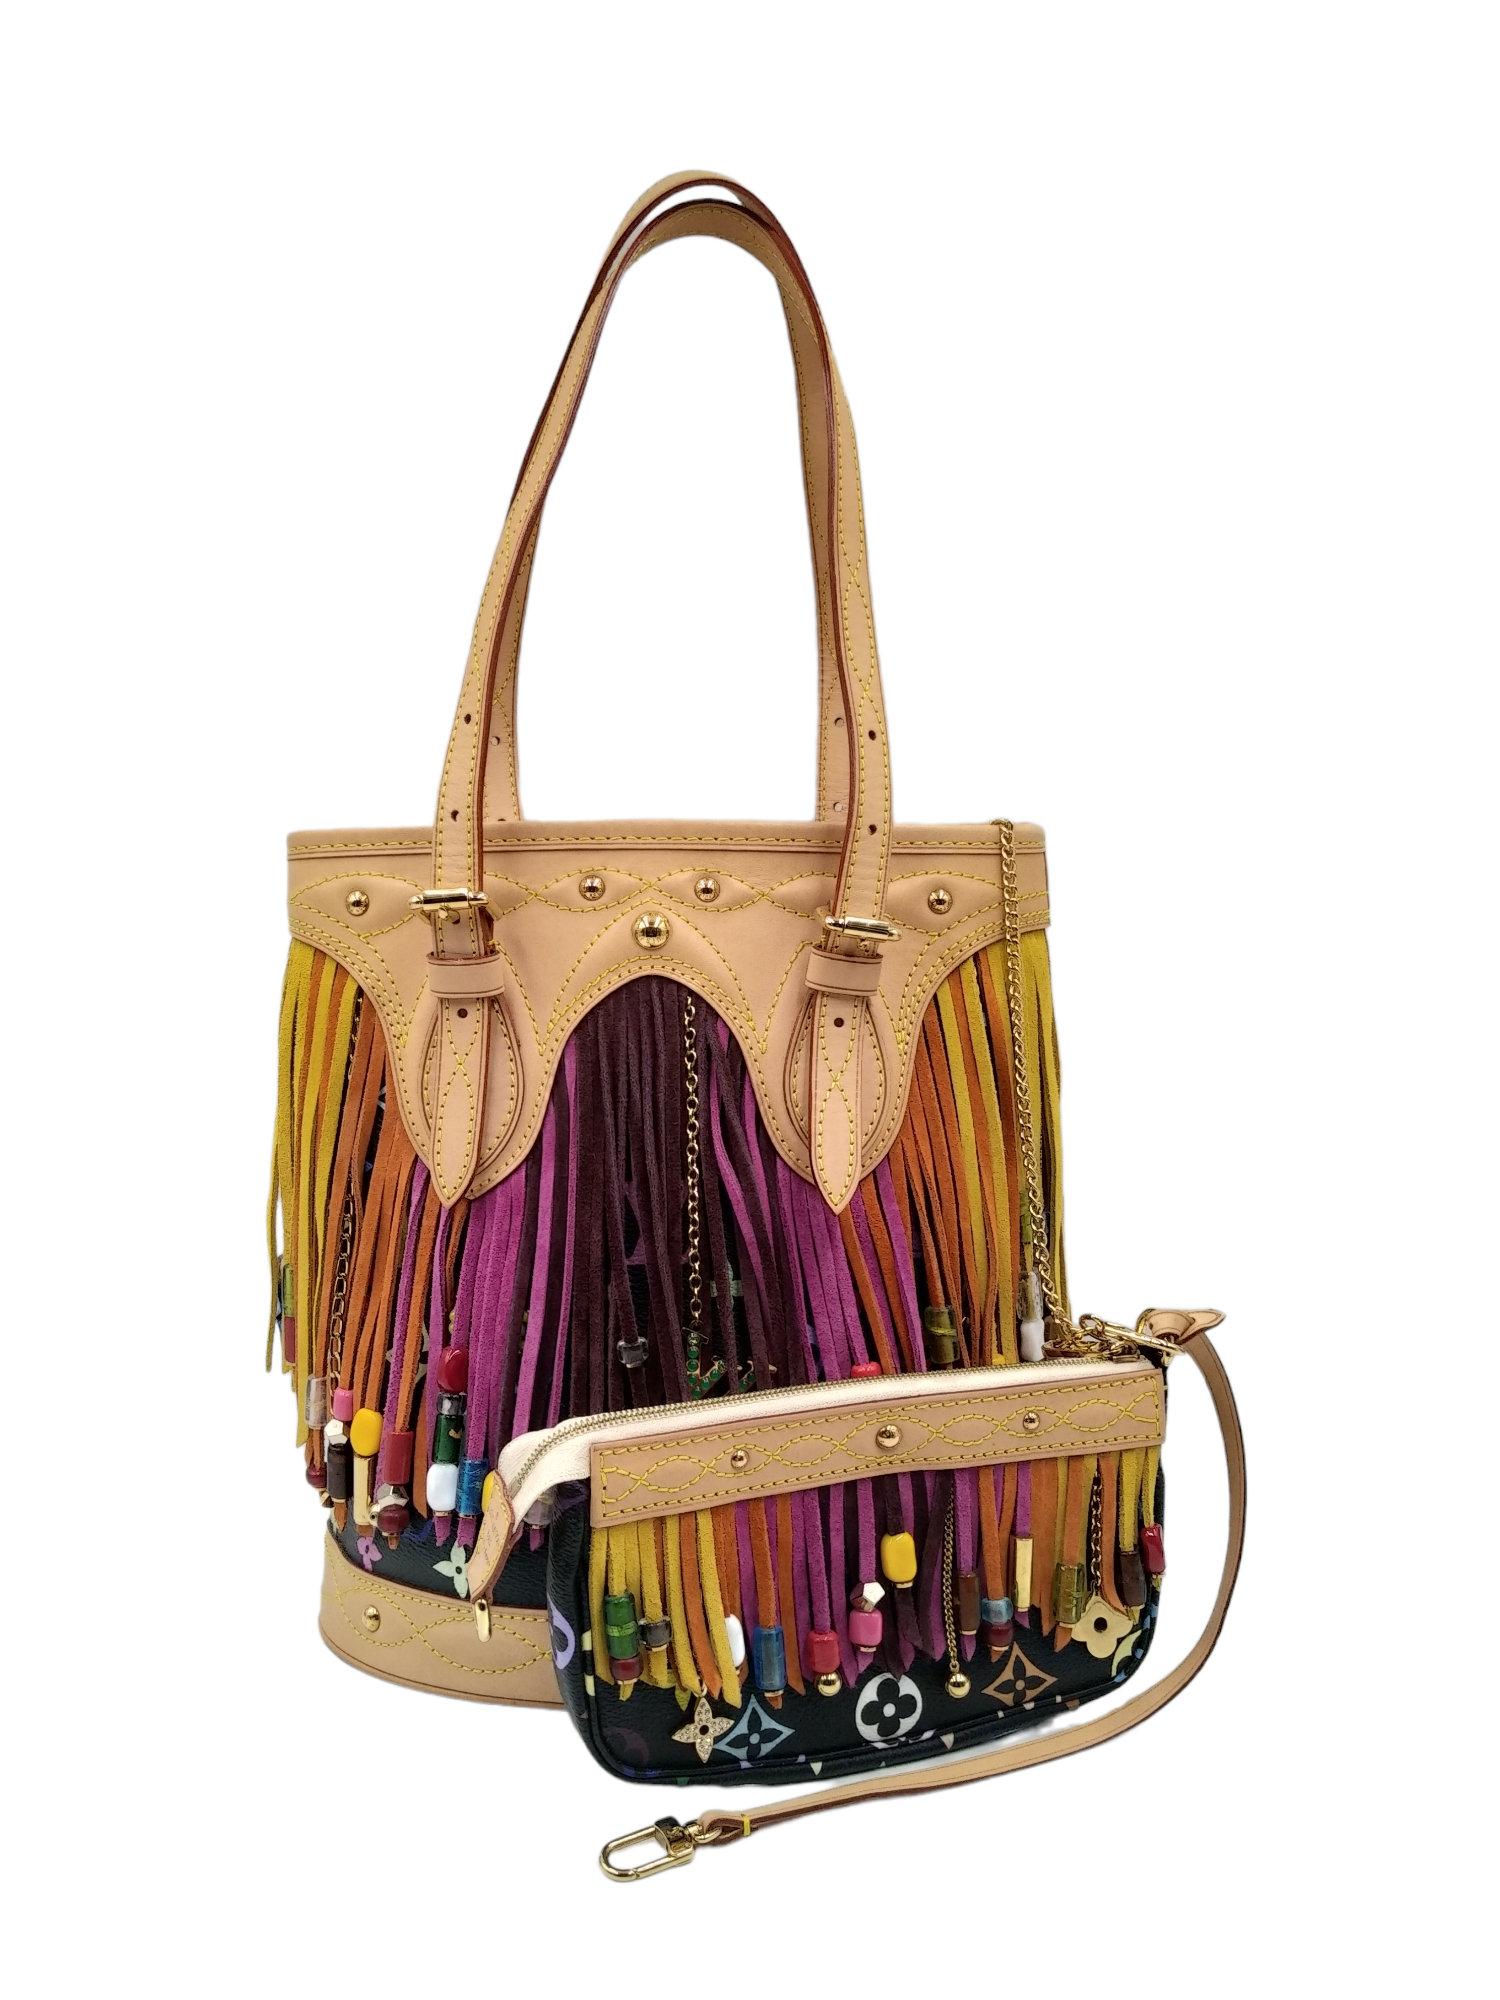 Louis Vuitton Fringe Bag - 6 For Sale on 1stDibs